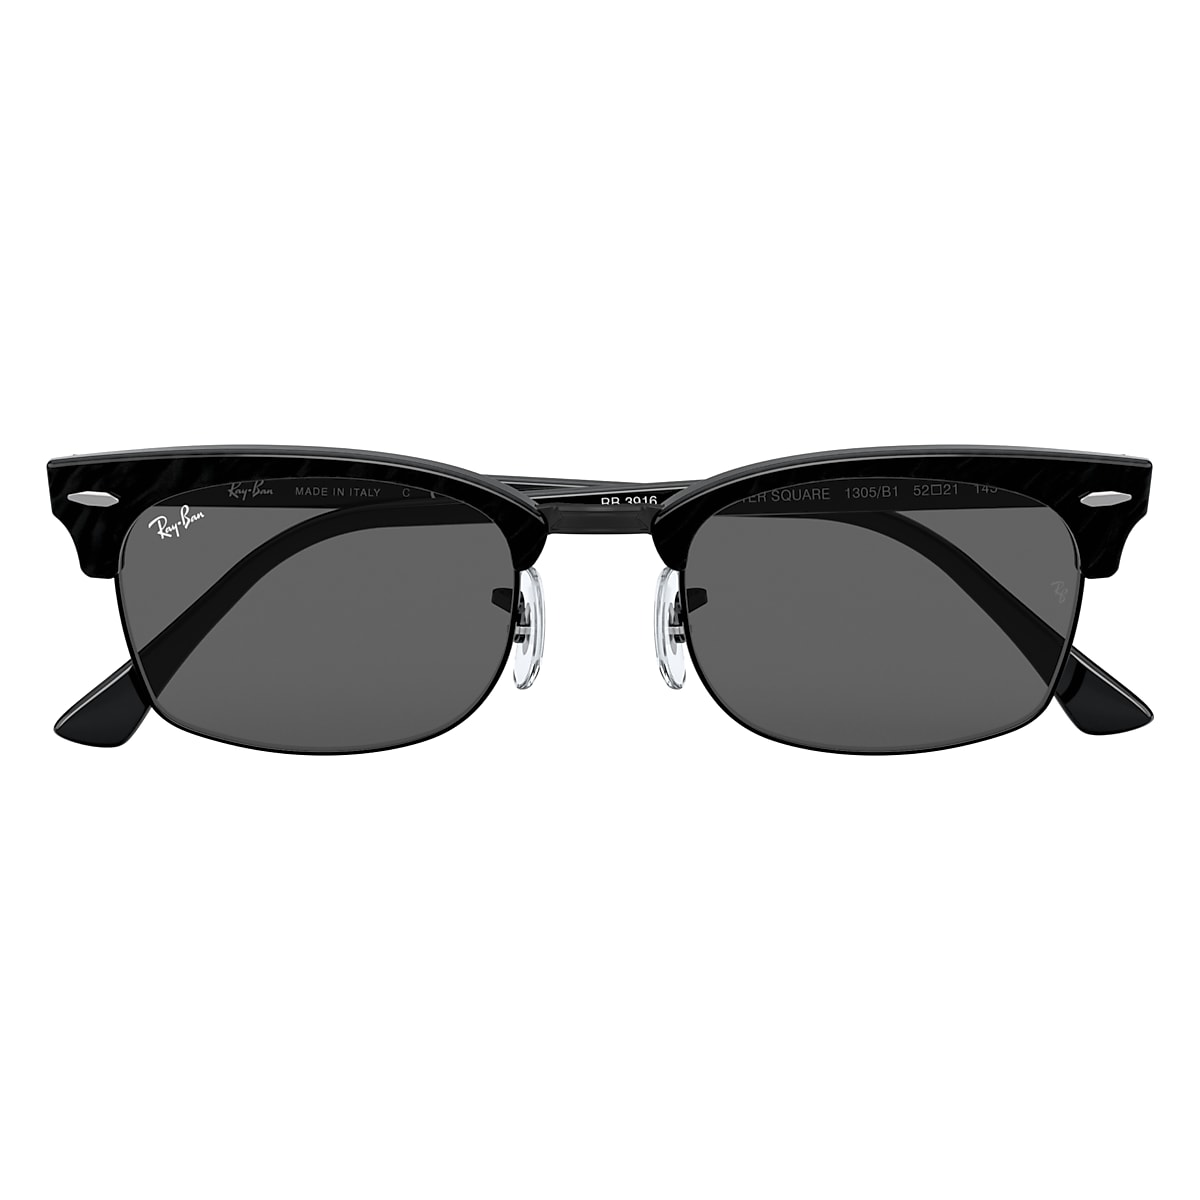 SQUARE Sunglasses Black and Dark - RB3916 | Ray-Ban® US